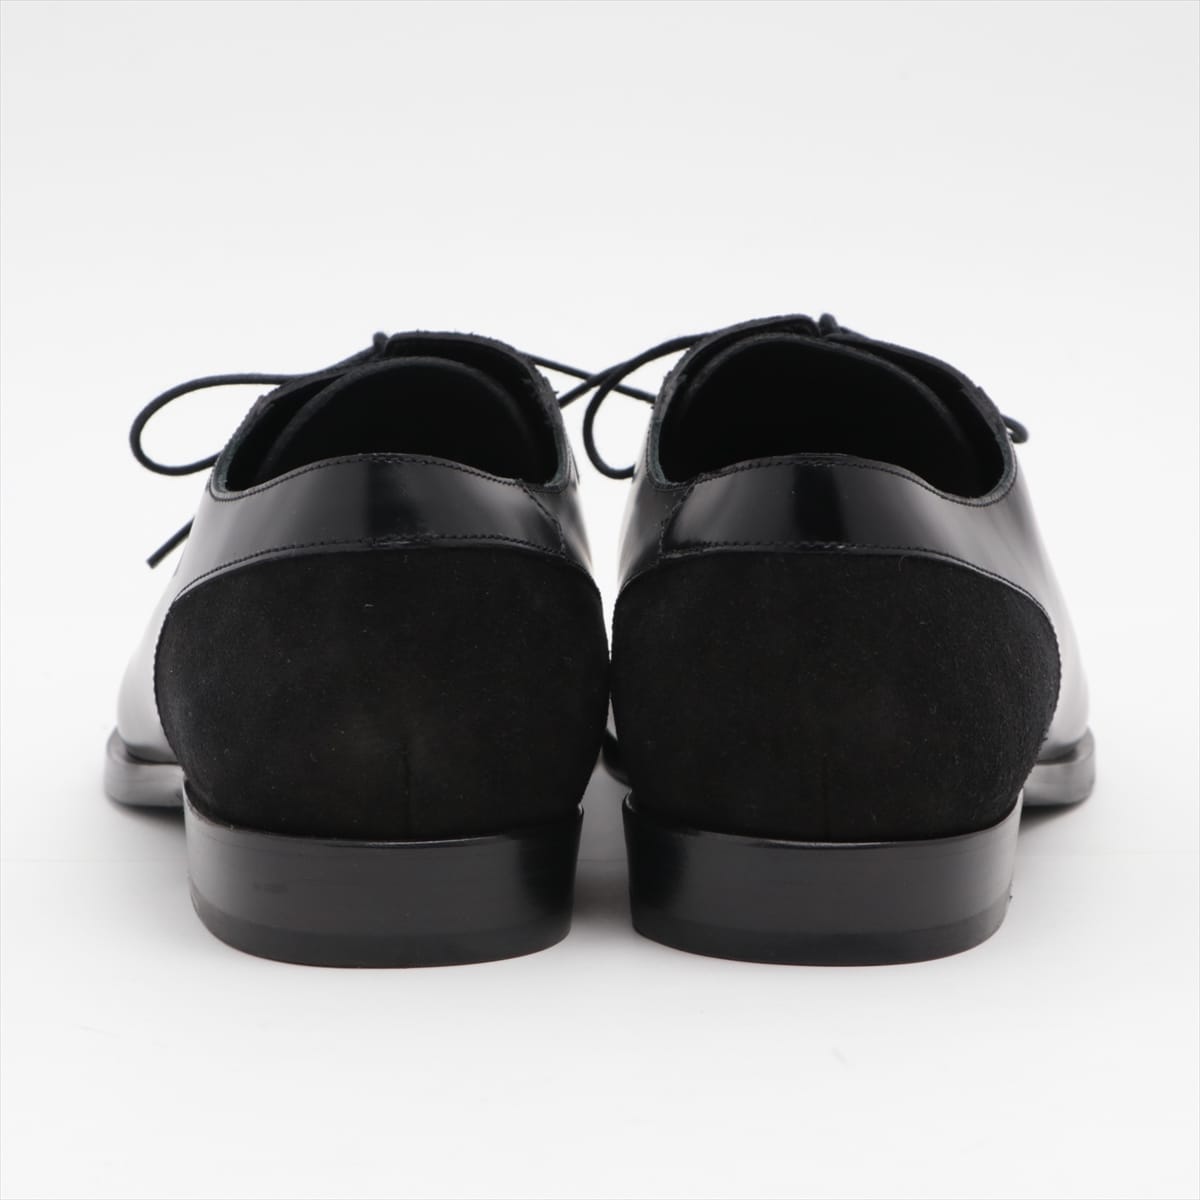 Jimmy Choo Leather & suede Dress shoes 41 Men's Black